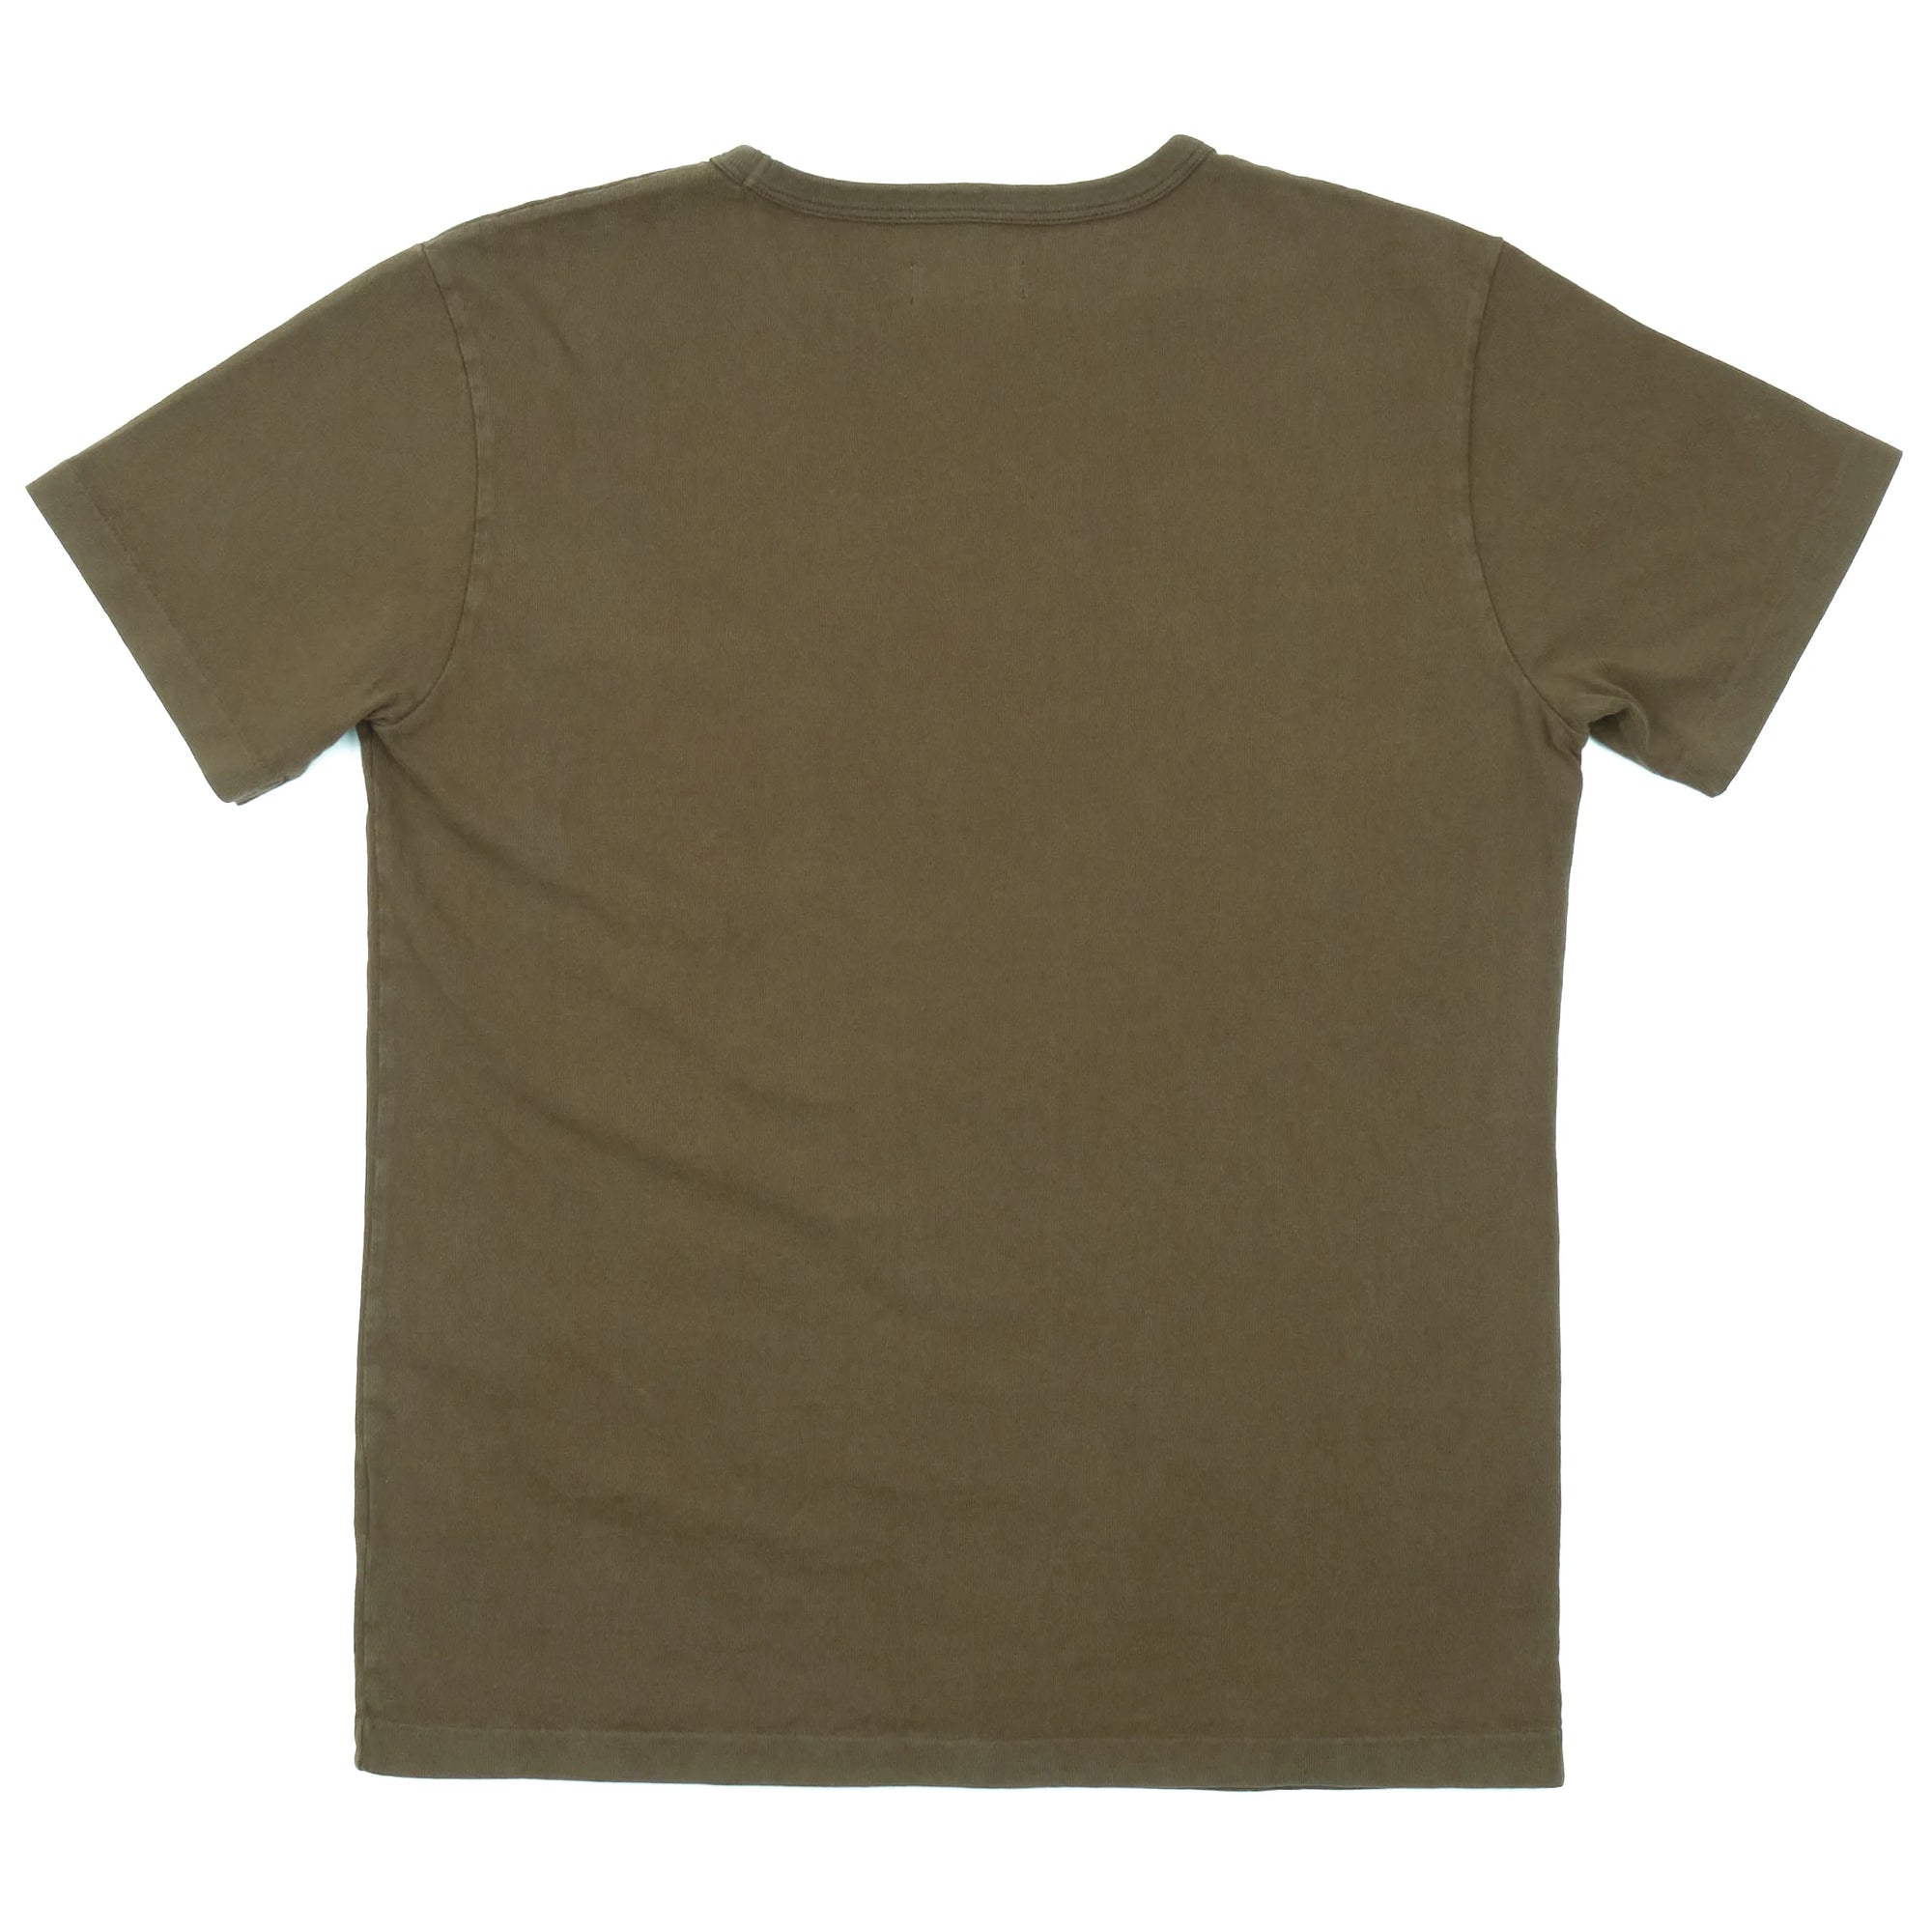 Freenote Cloth 13oz Pocket T-Shirt - Cedar